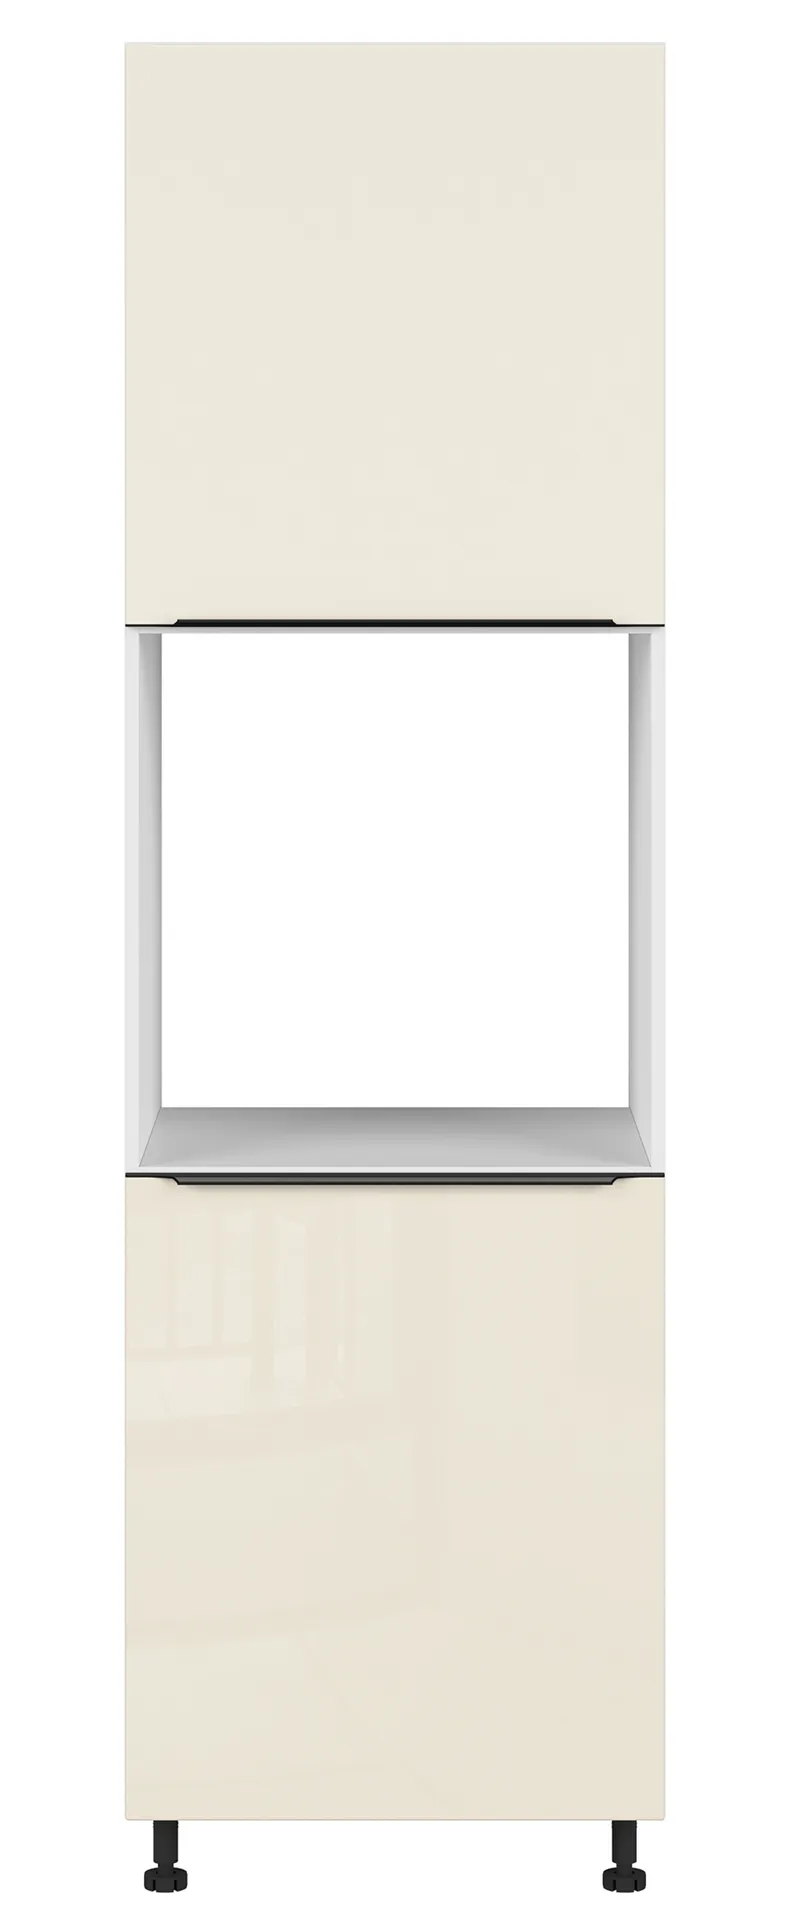 BRW Sole L6 60 см левосторонний кухонный шкаф магнолия жемчуг, альпийский белый/жемчуг магнолии FM_DPS_60/207_L/L-BAL/MAPE фото №1